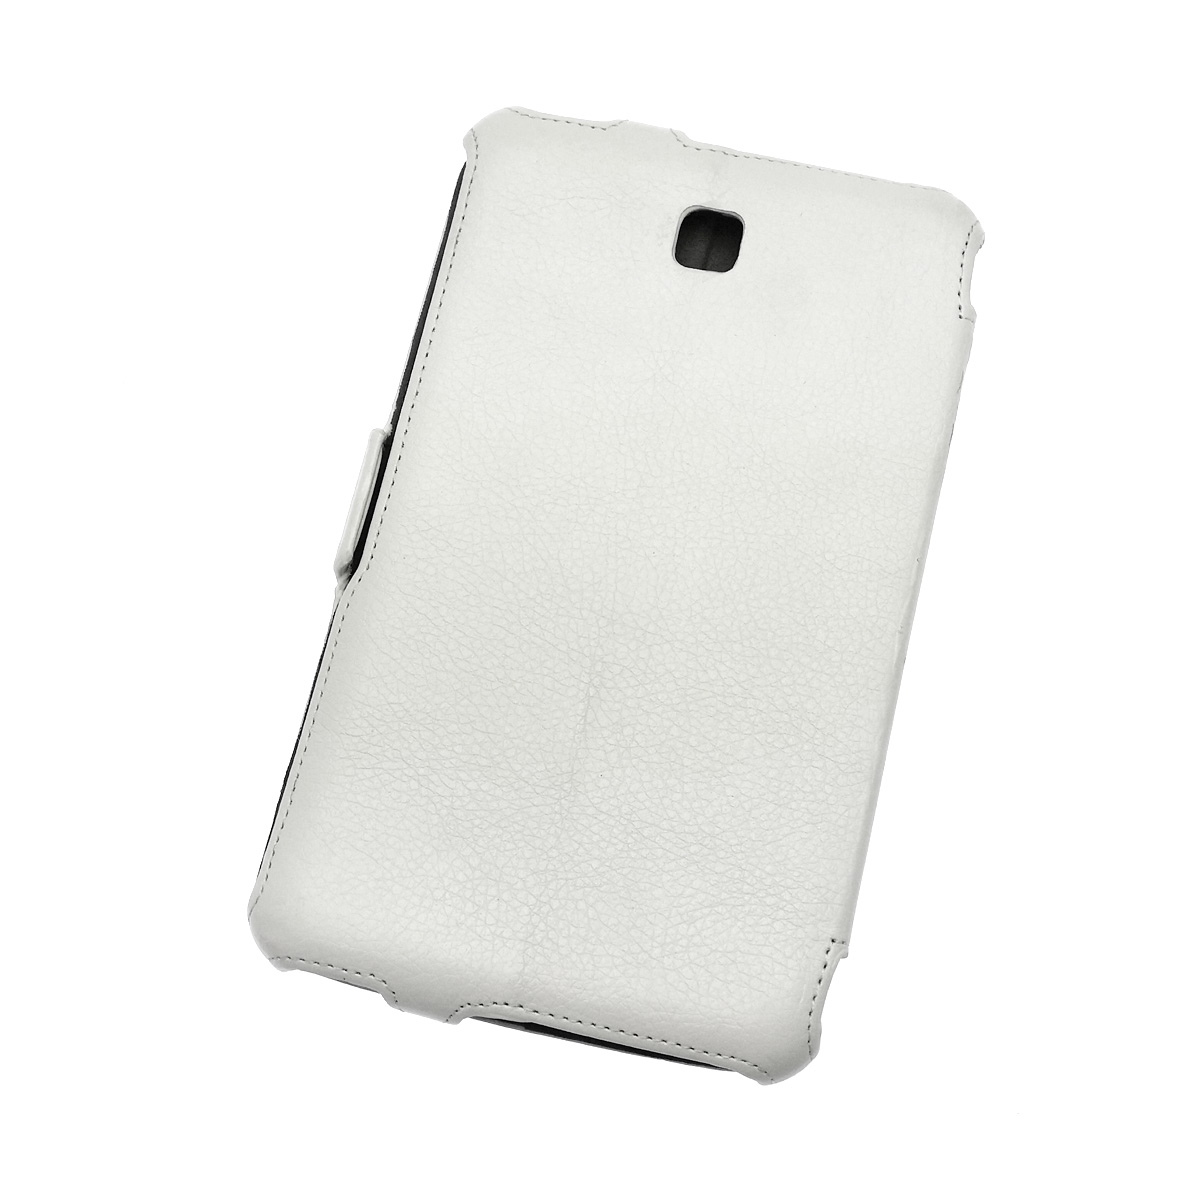 Чехол книжка для SAMSUNG Galaxy Tab 3 7.0 (SM-P3200), цвет белый.